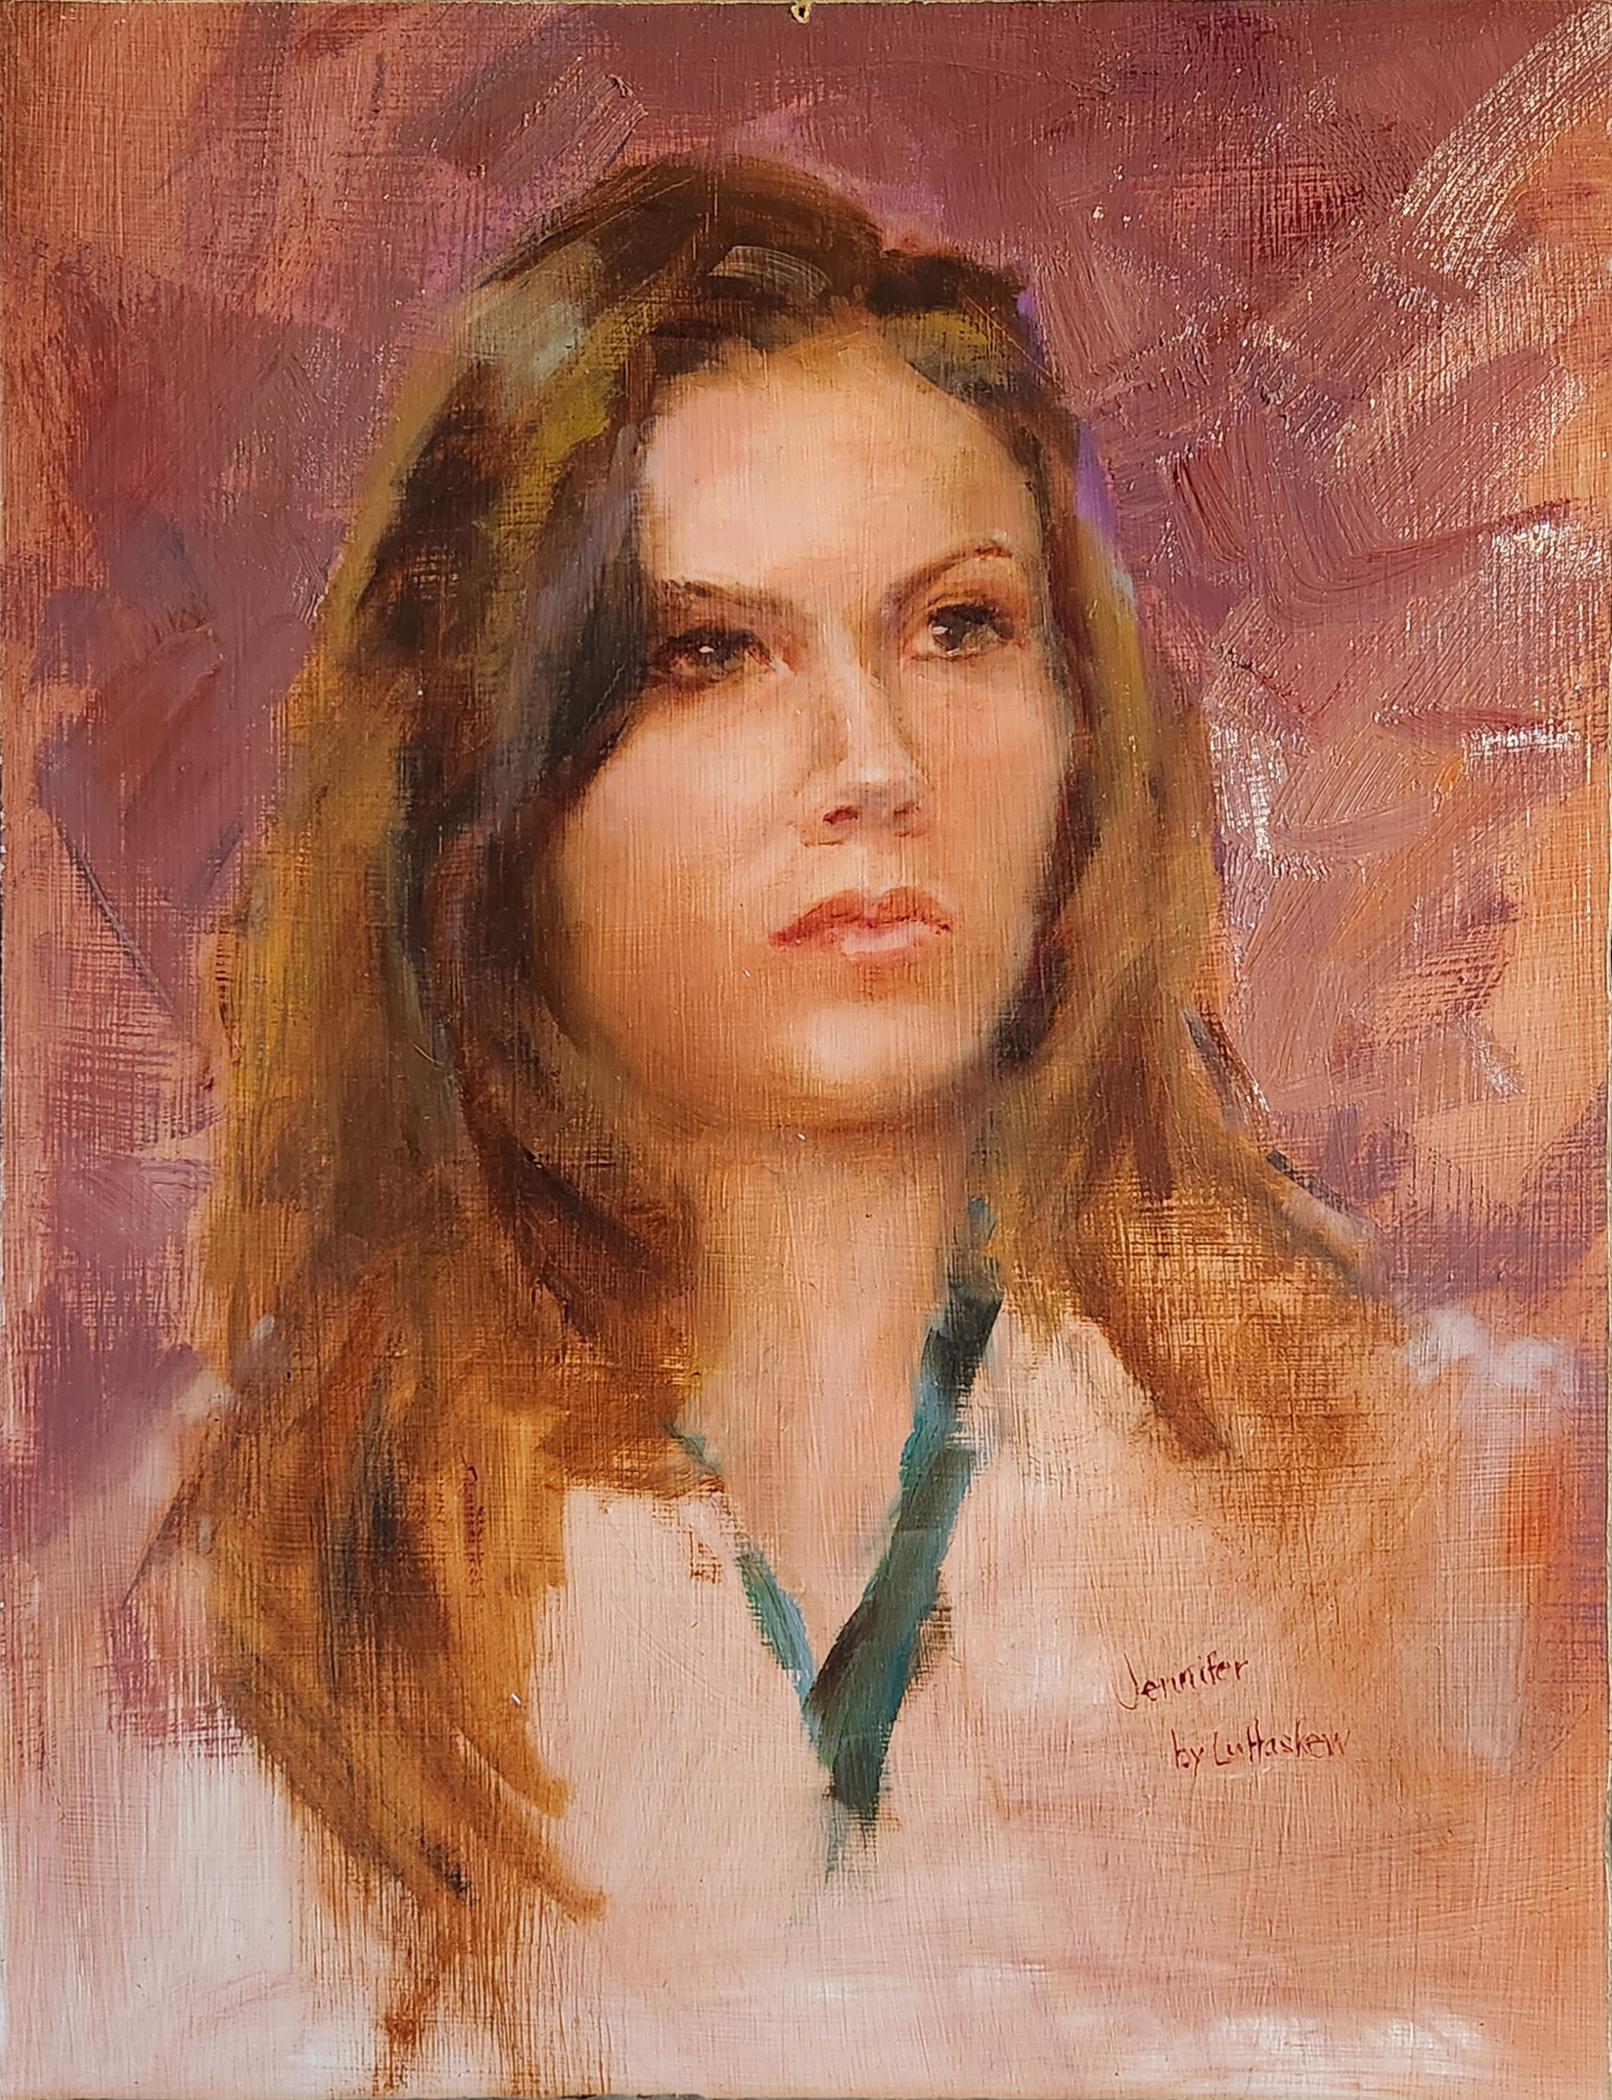 Lu Haskew Figurative Painting - Jennifer, 16x12" oil on board